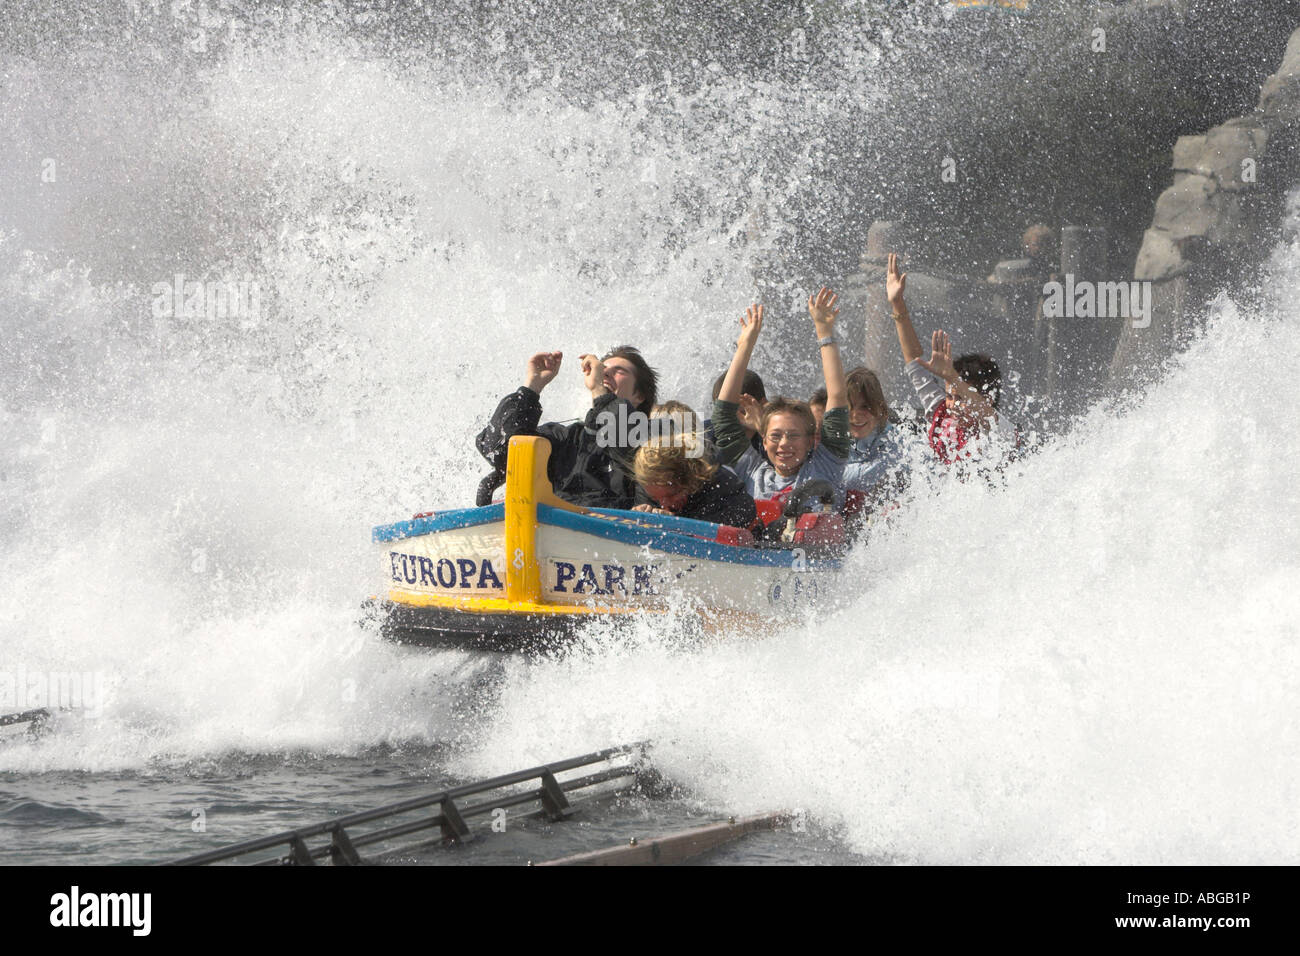 Water roller coaster poseidon, Europa park Rust, Bade-Wuerttemberg, Germany Stock Photo